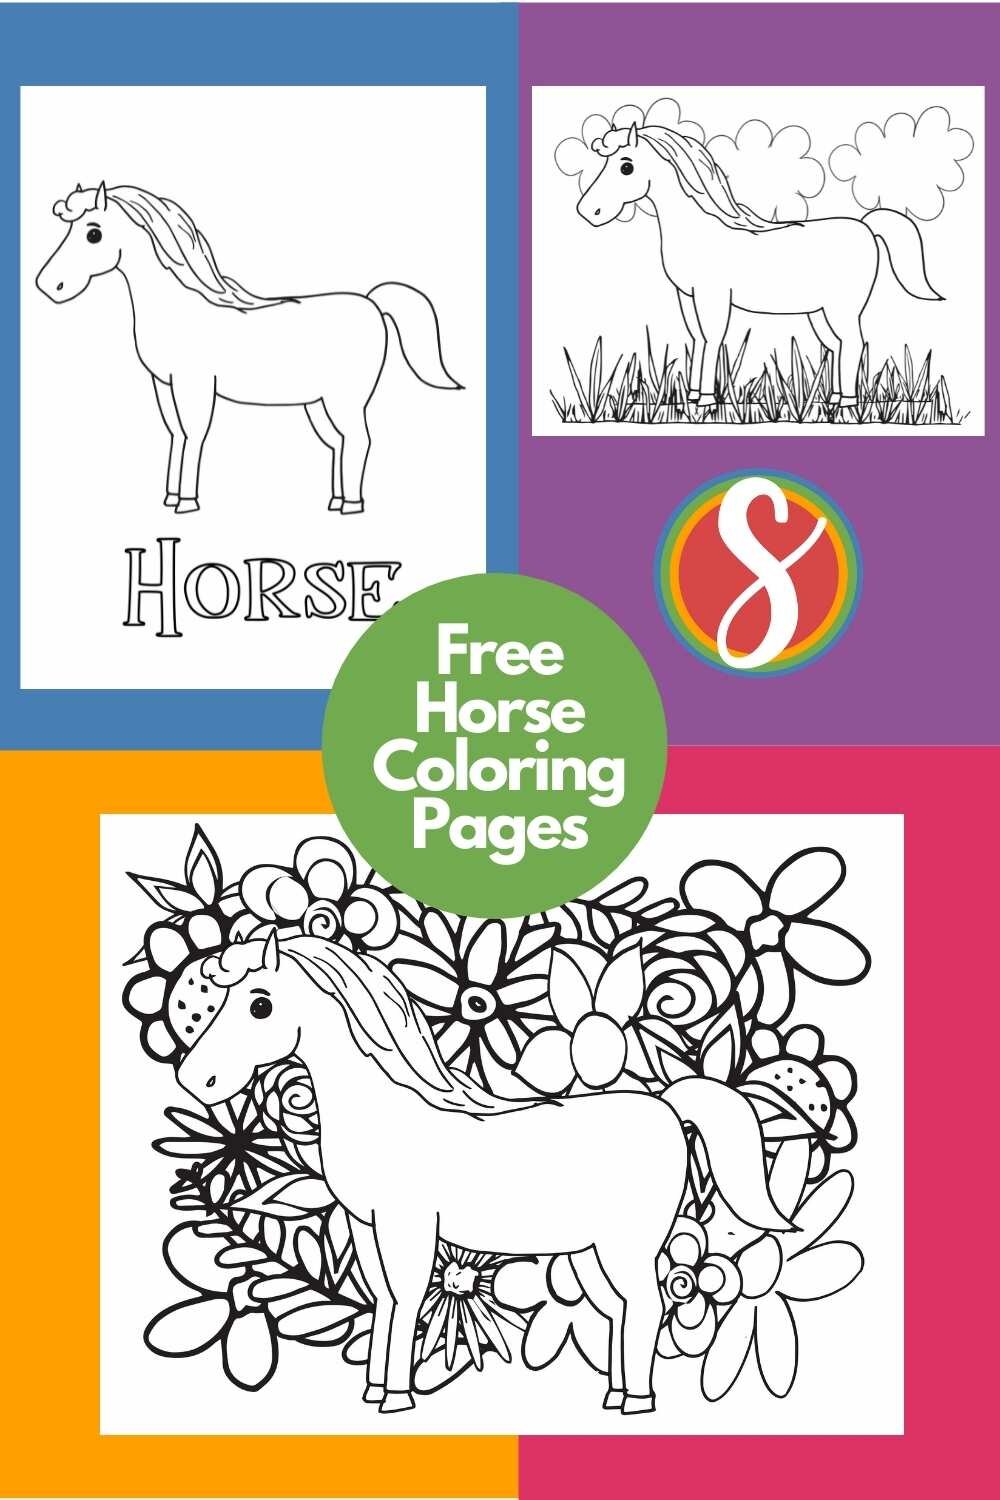 Free horse coloring pages â stevie doodles